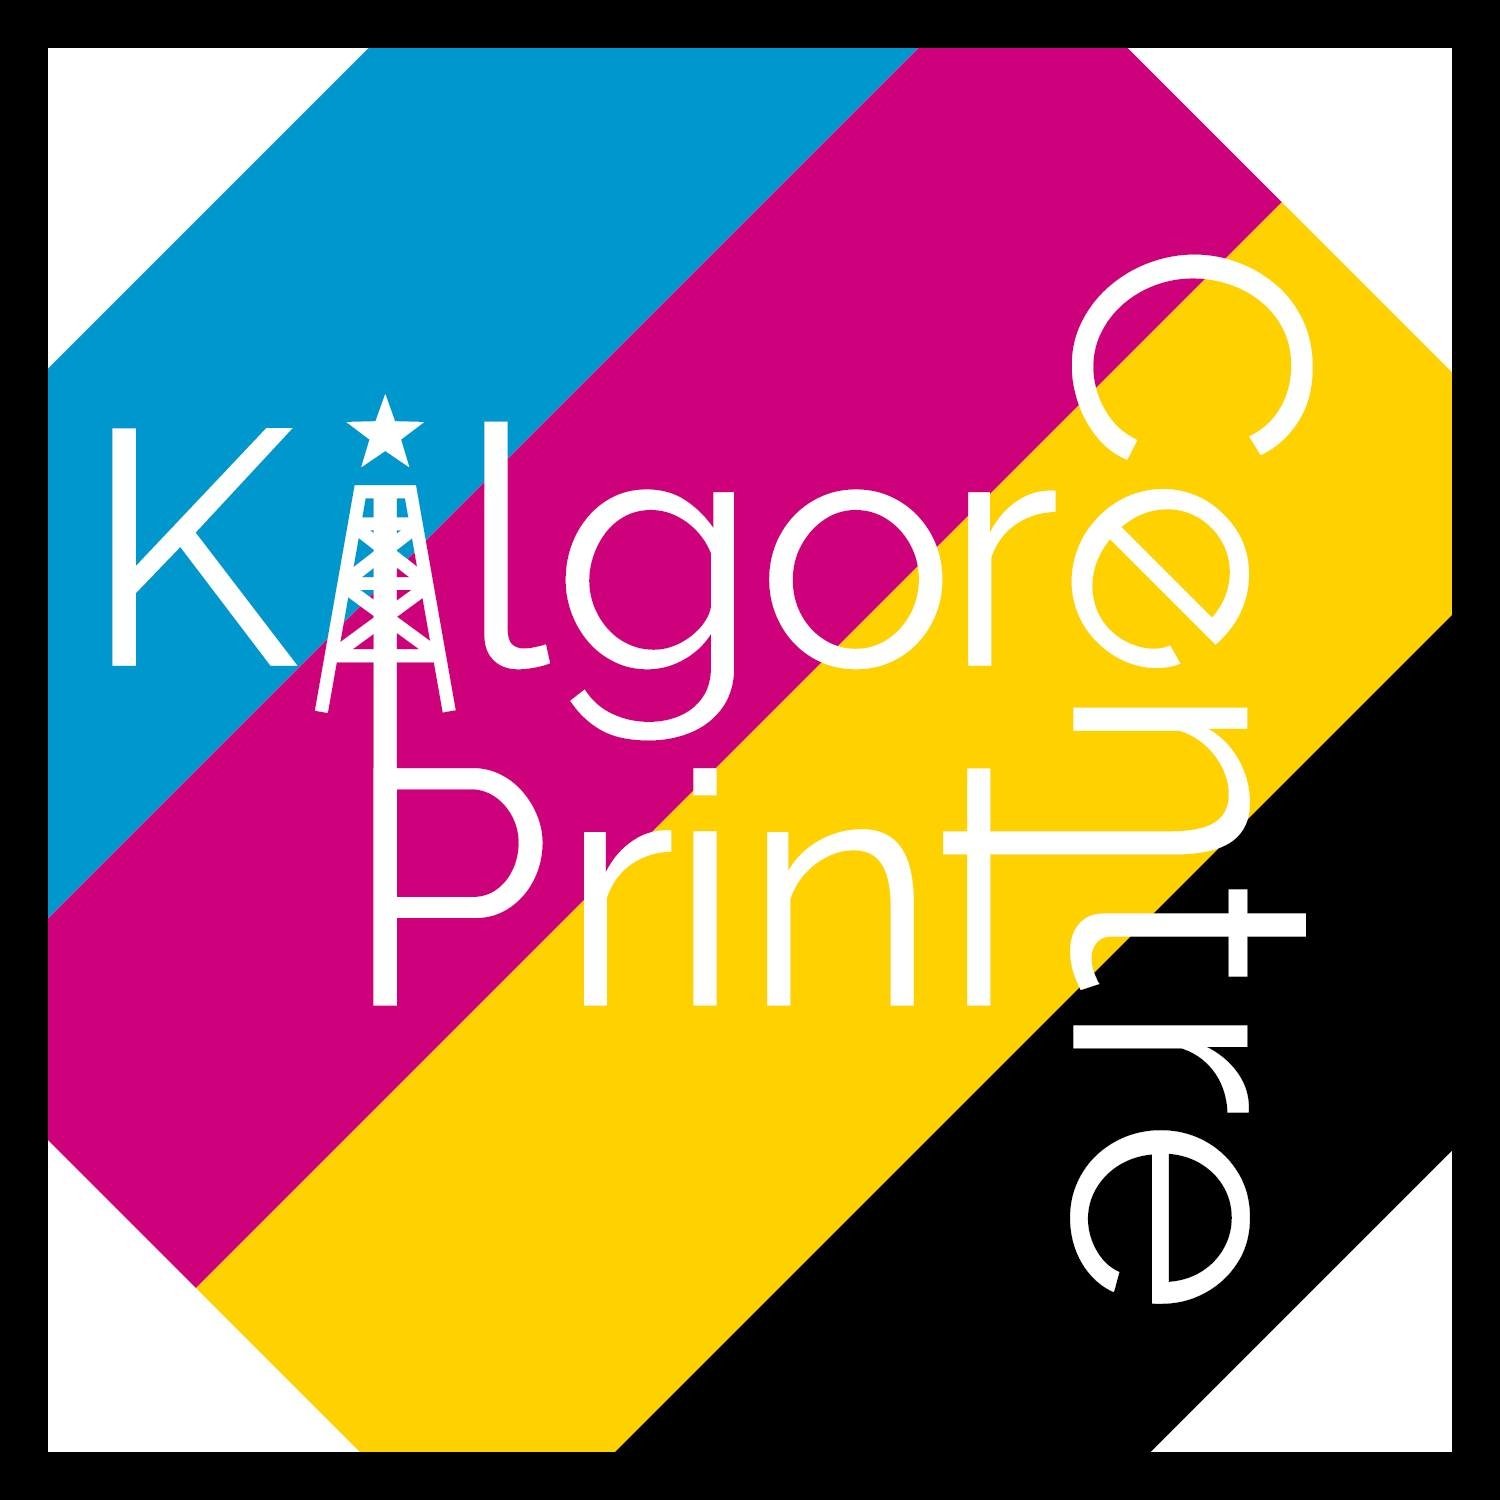 Kilgore Print Centre